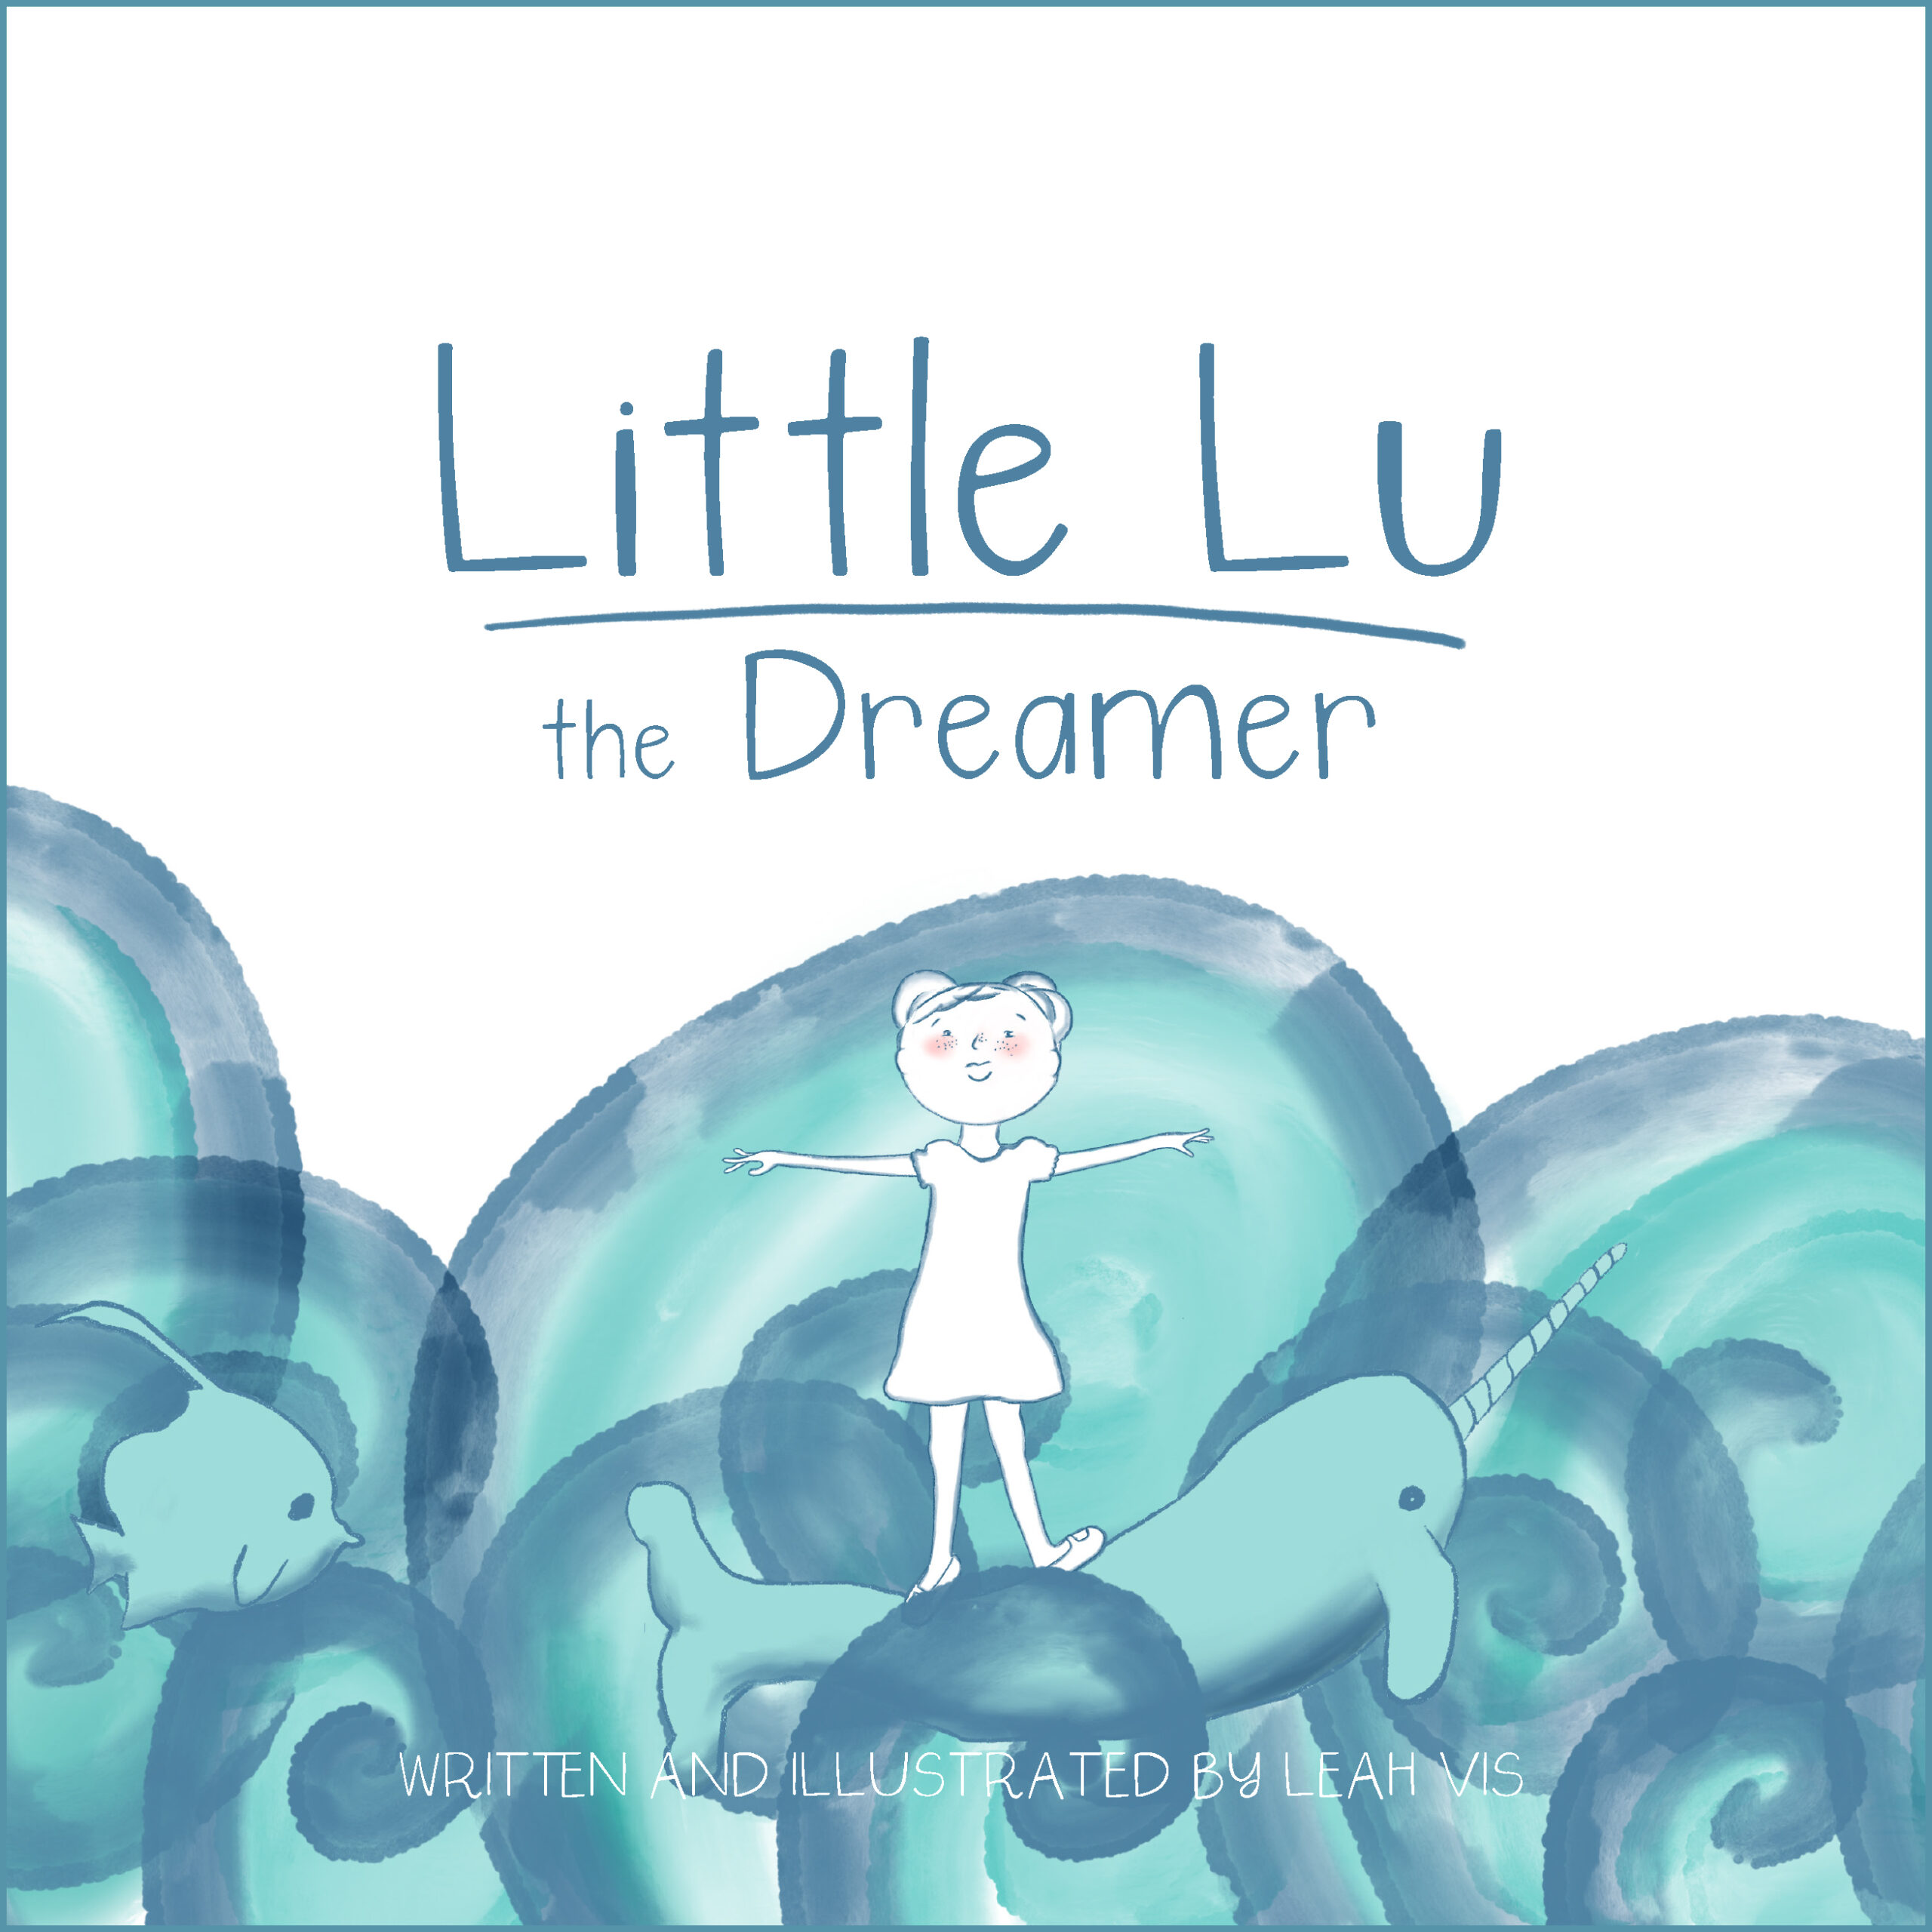 FREE: Little Lu the Dreamer by Leah Vis